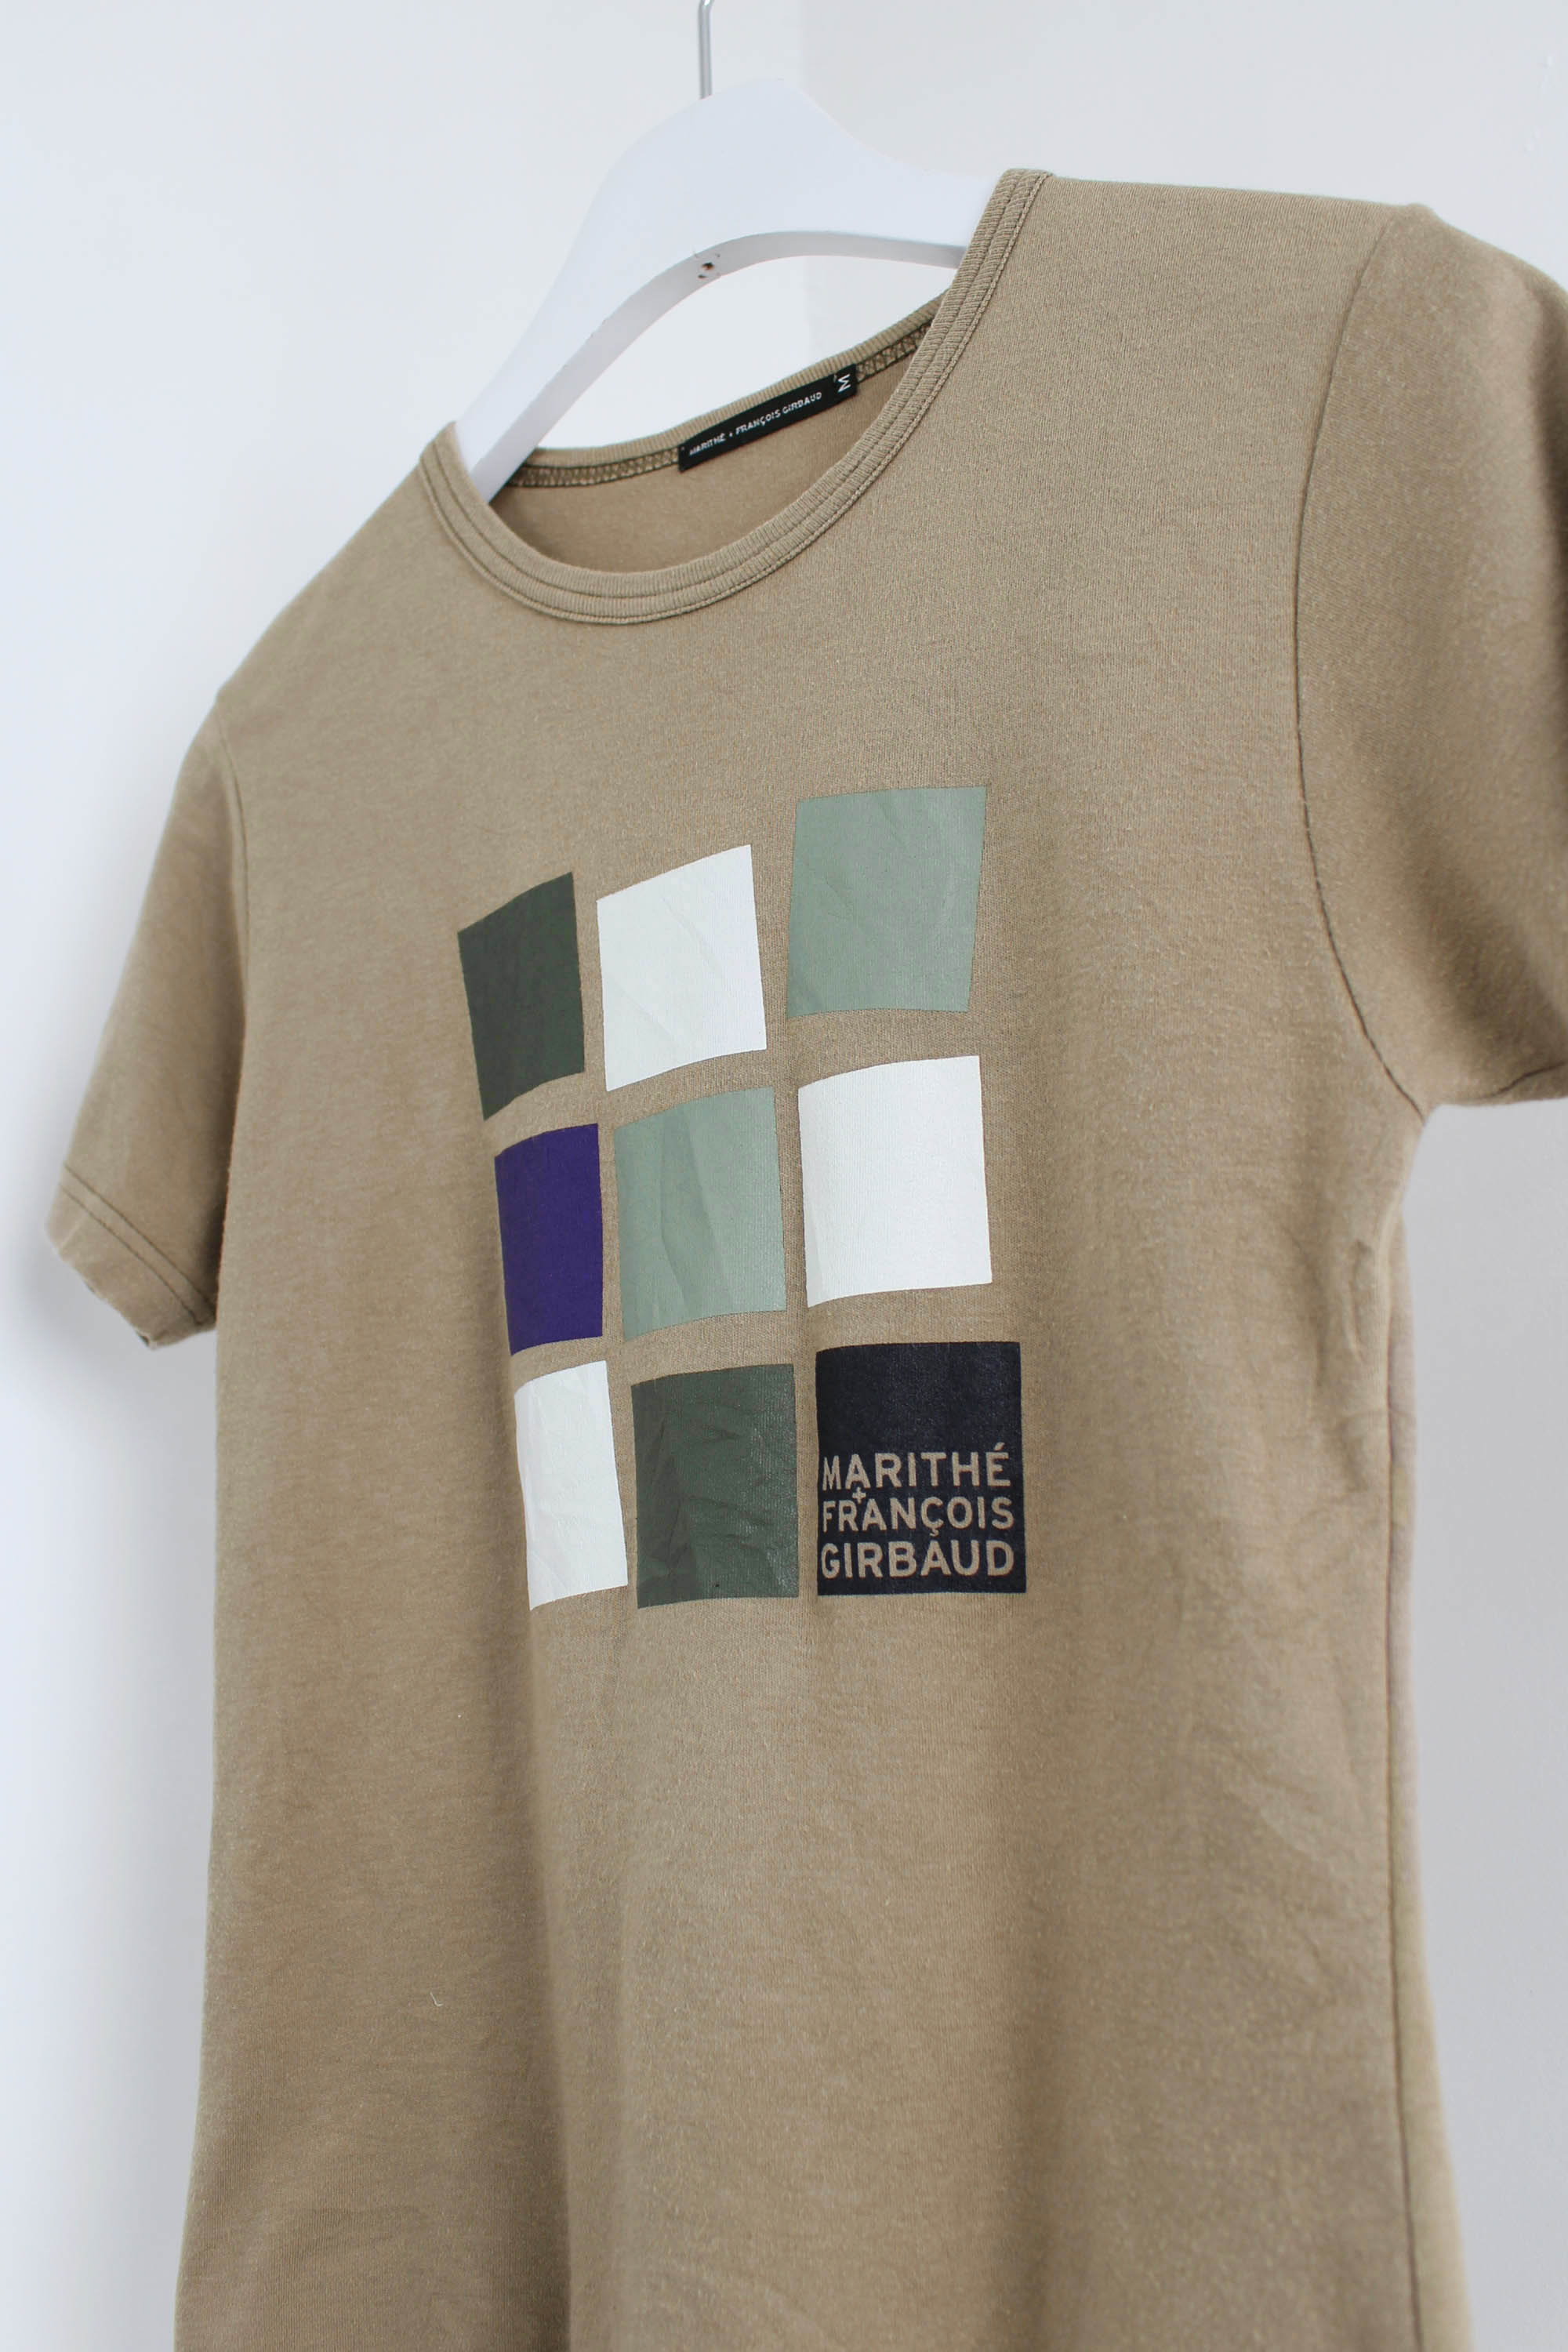 old MARITHE FRANCOIS GIRBAUD t-shirt